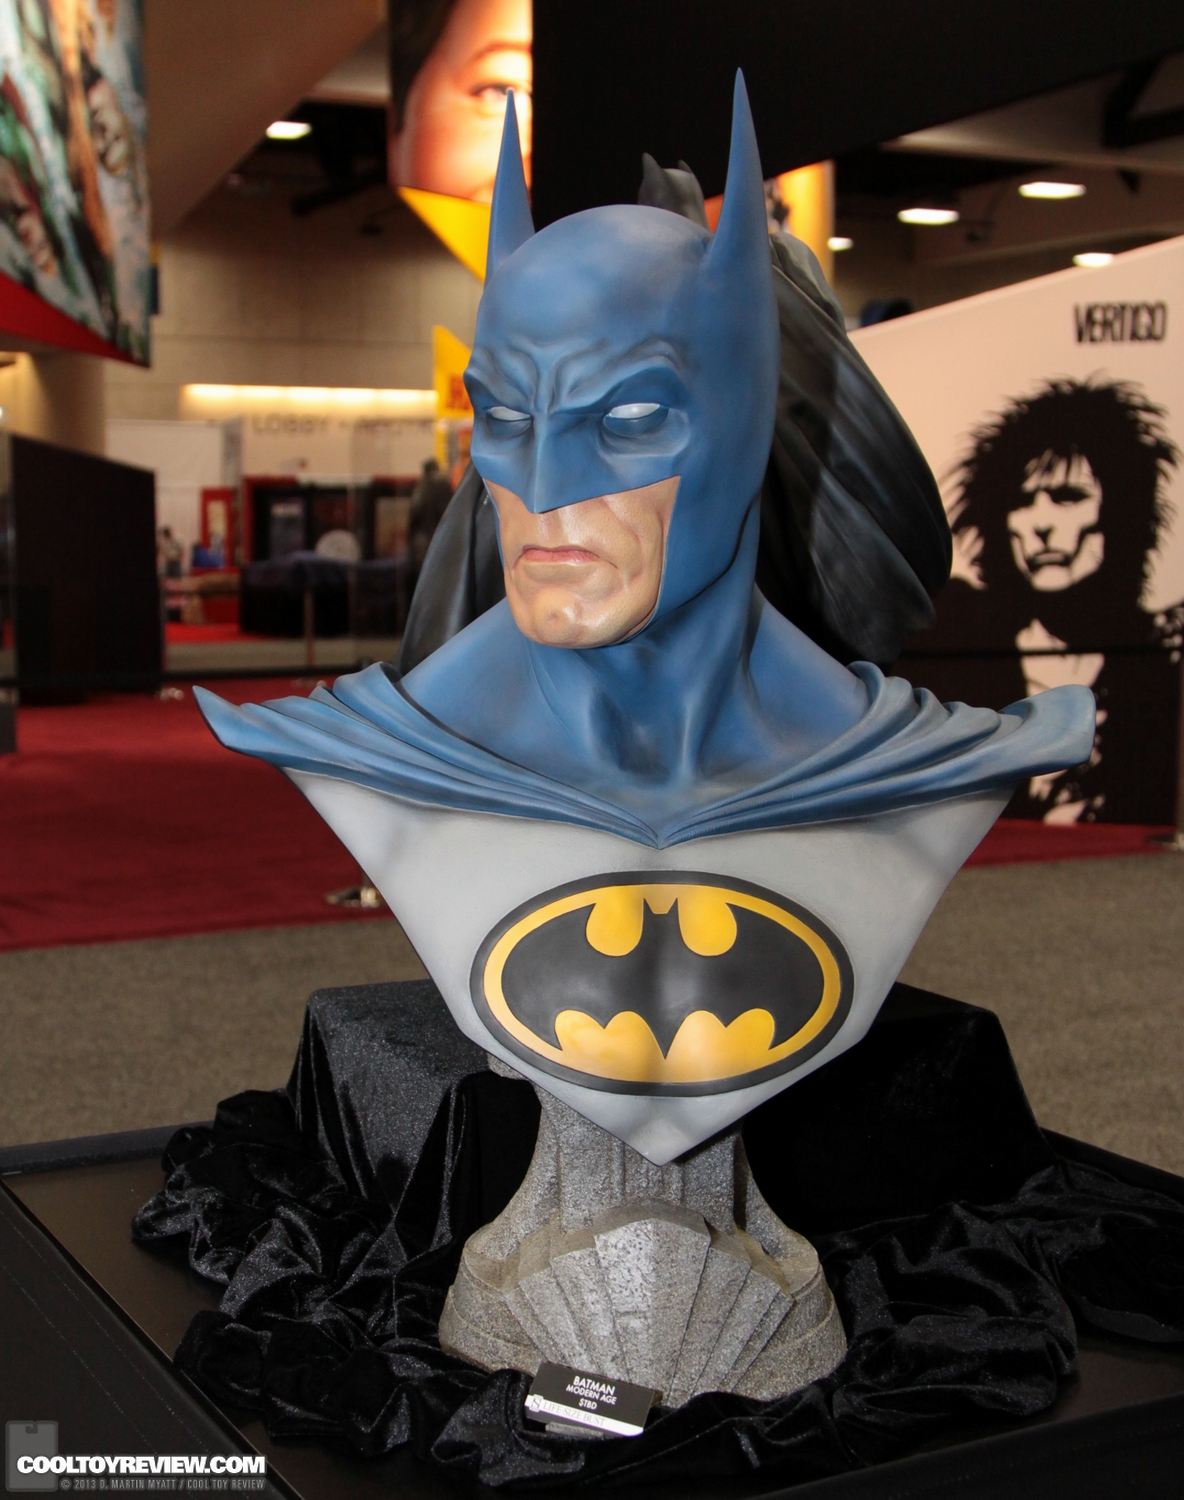 Sideshow Collectibles Batman Bust